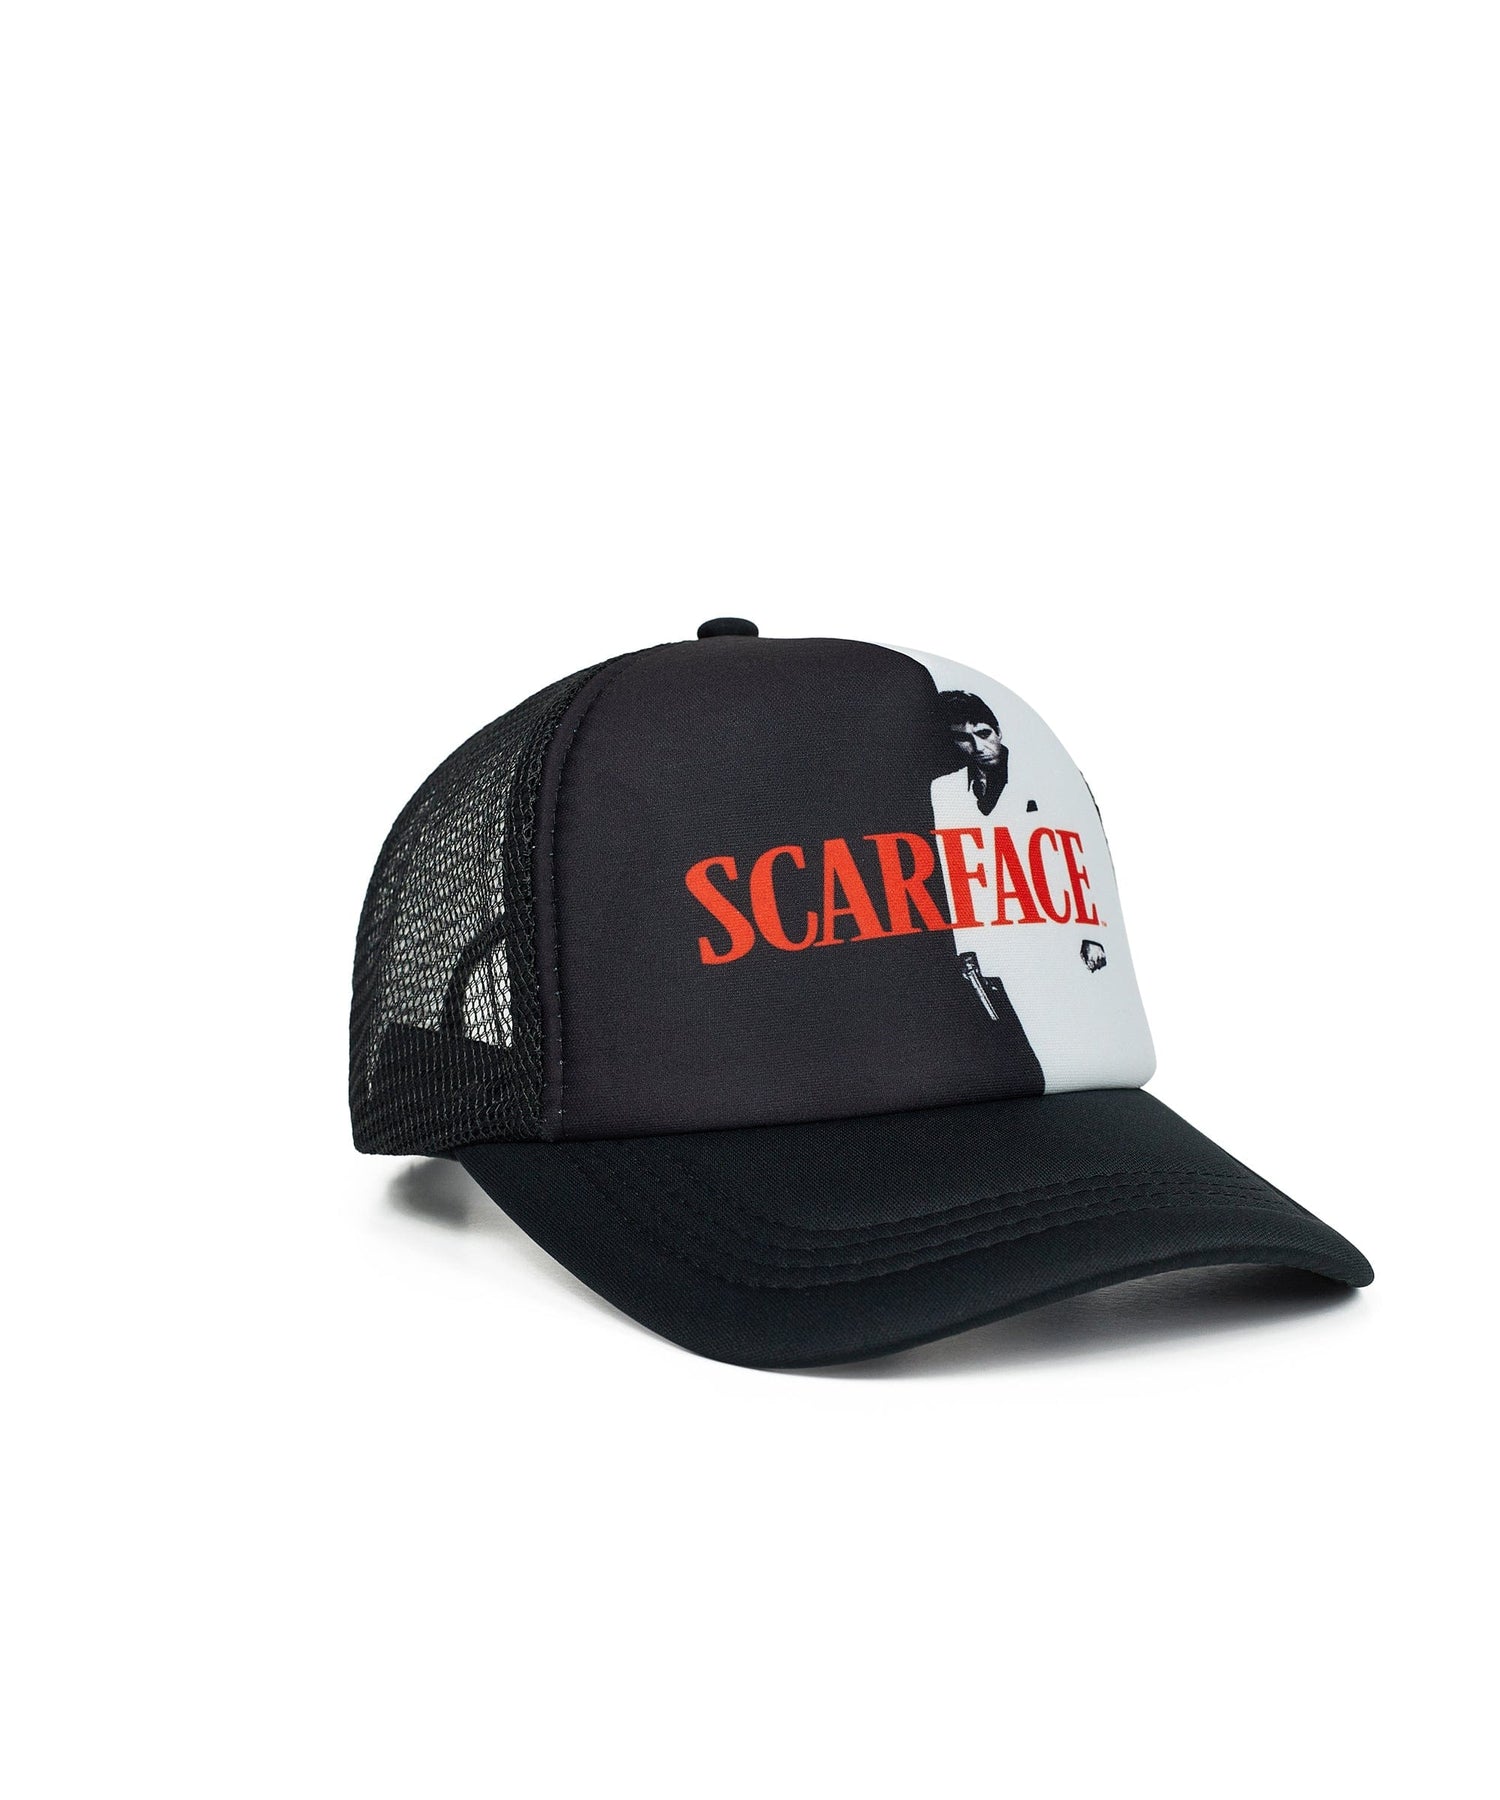 Scarface Trucker Hat Reason – Clothing